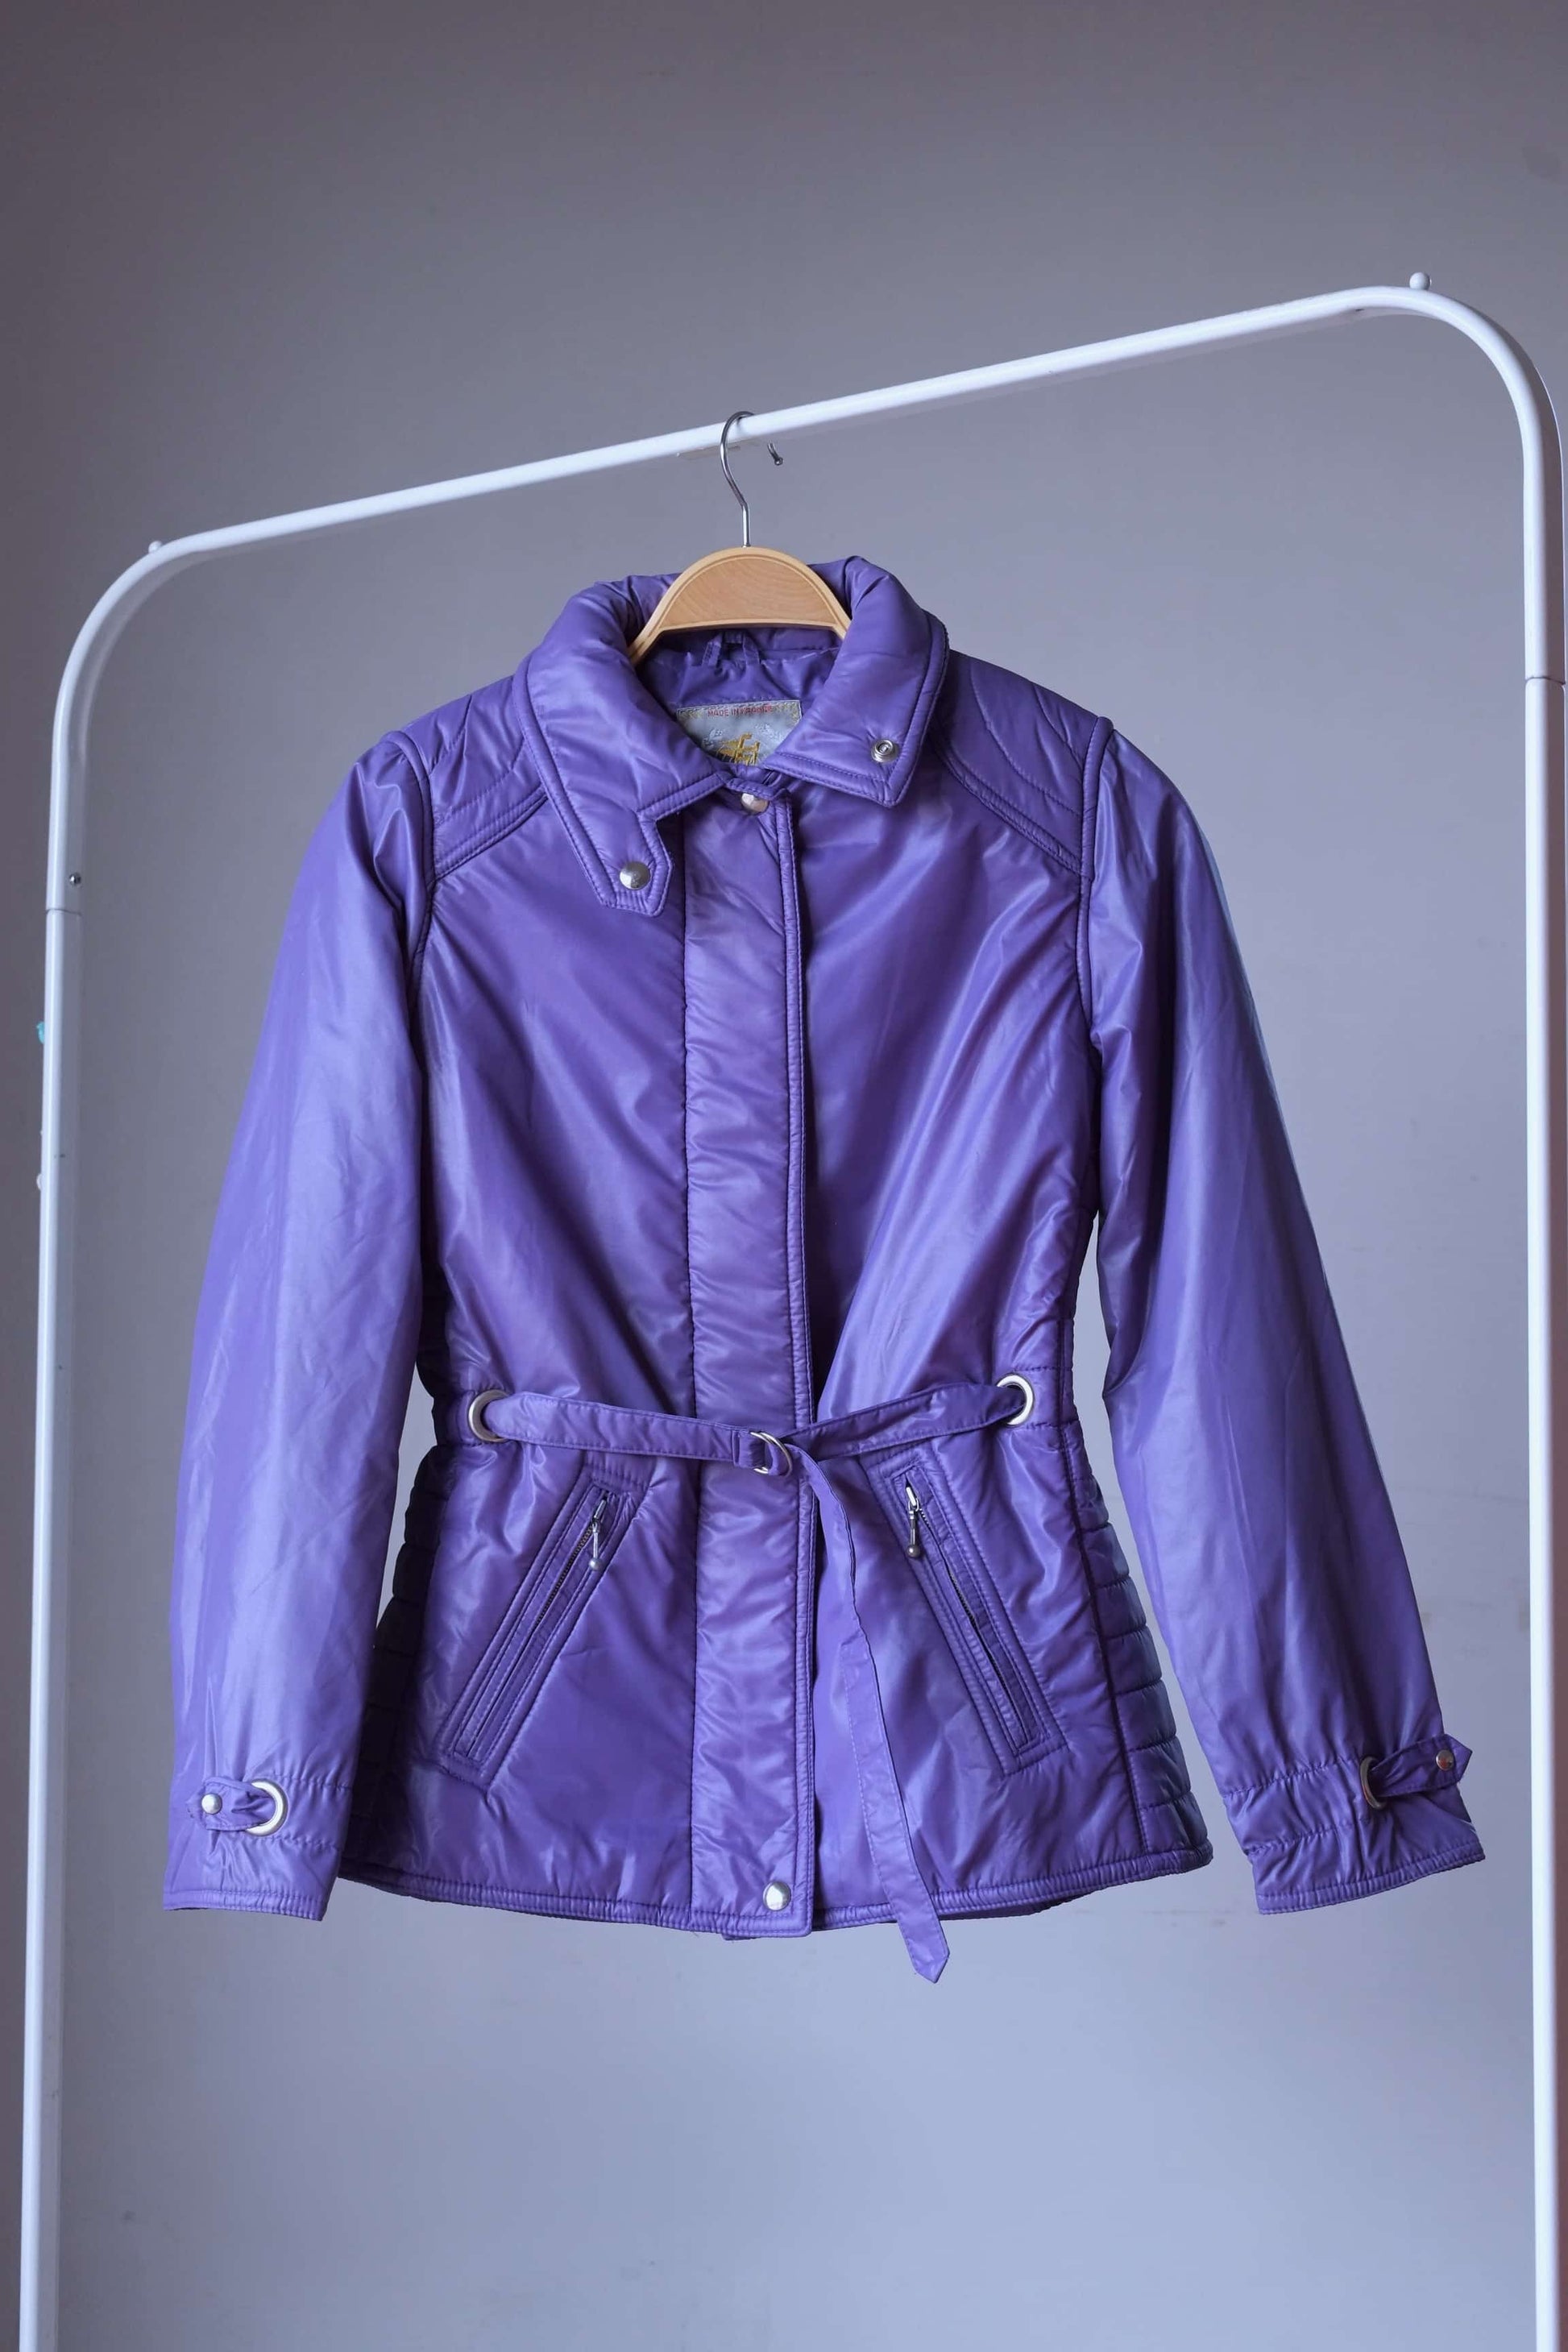 Purple jacket of Vintage 70s women 2-piece ski suit on hanger